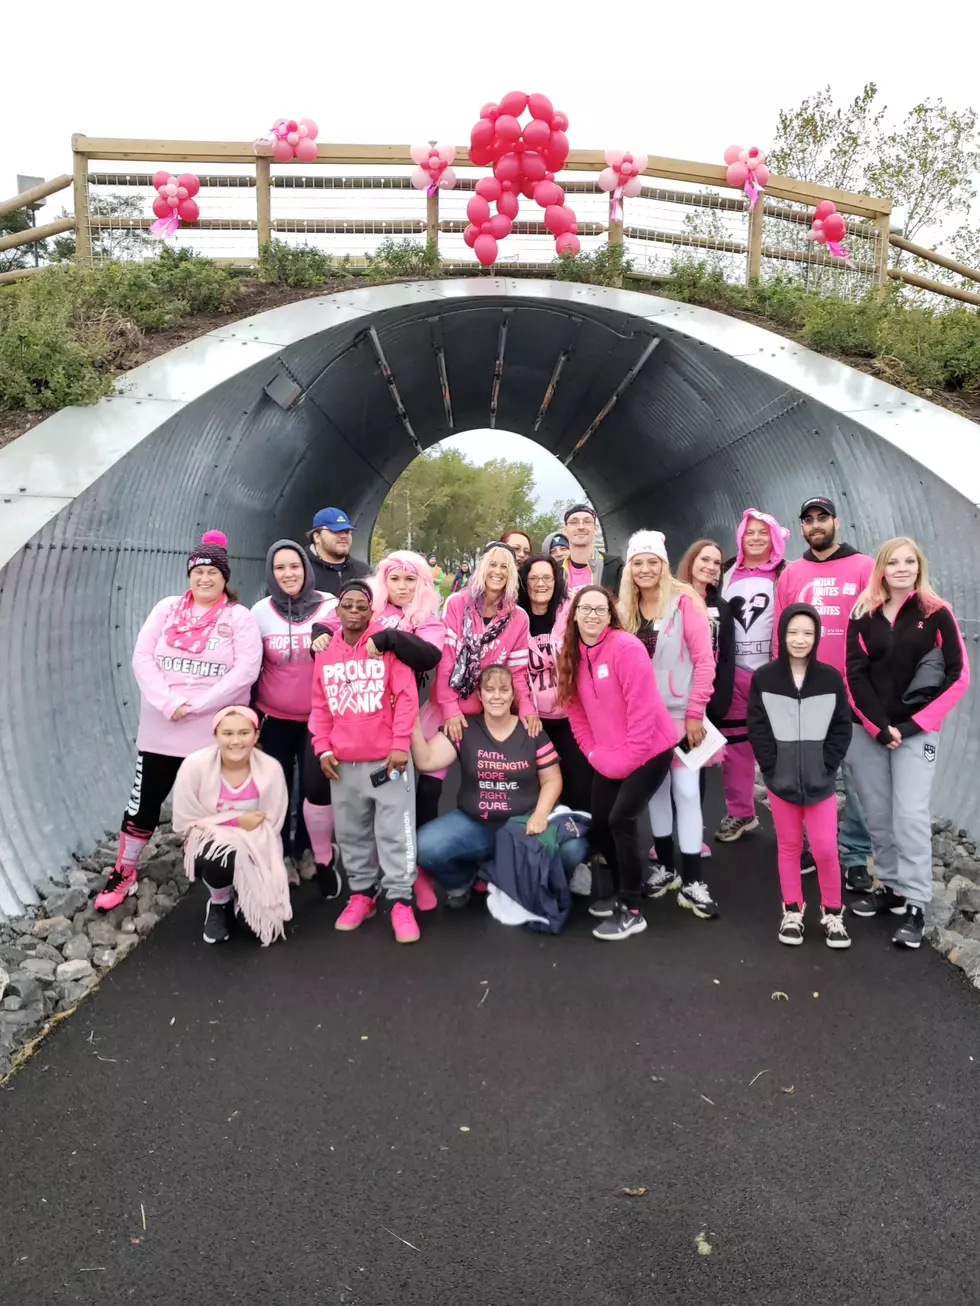 Making Strides Against Breast Cancer Walk Raised $450,000